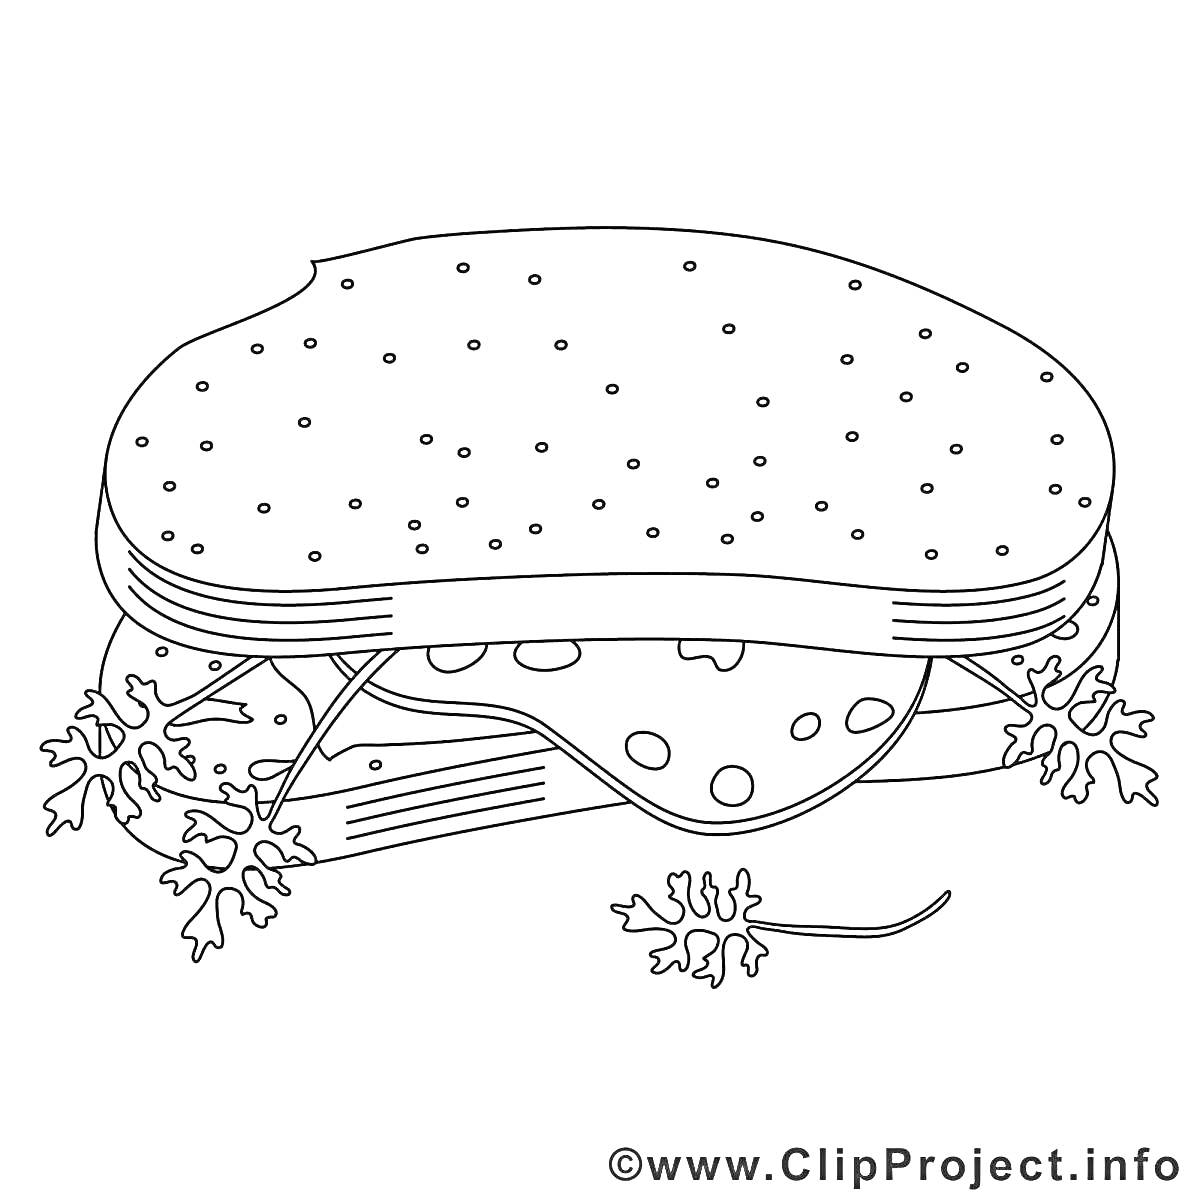 На раскраске изображено: Бутерброд, Колбаса, Сыр, Зелень, Хлеб, Еда